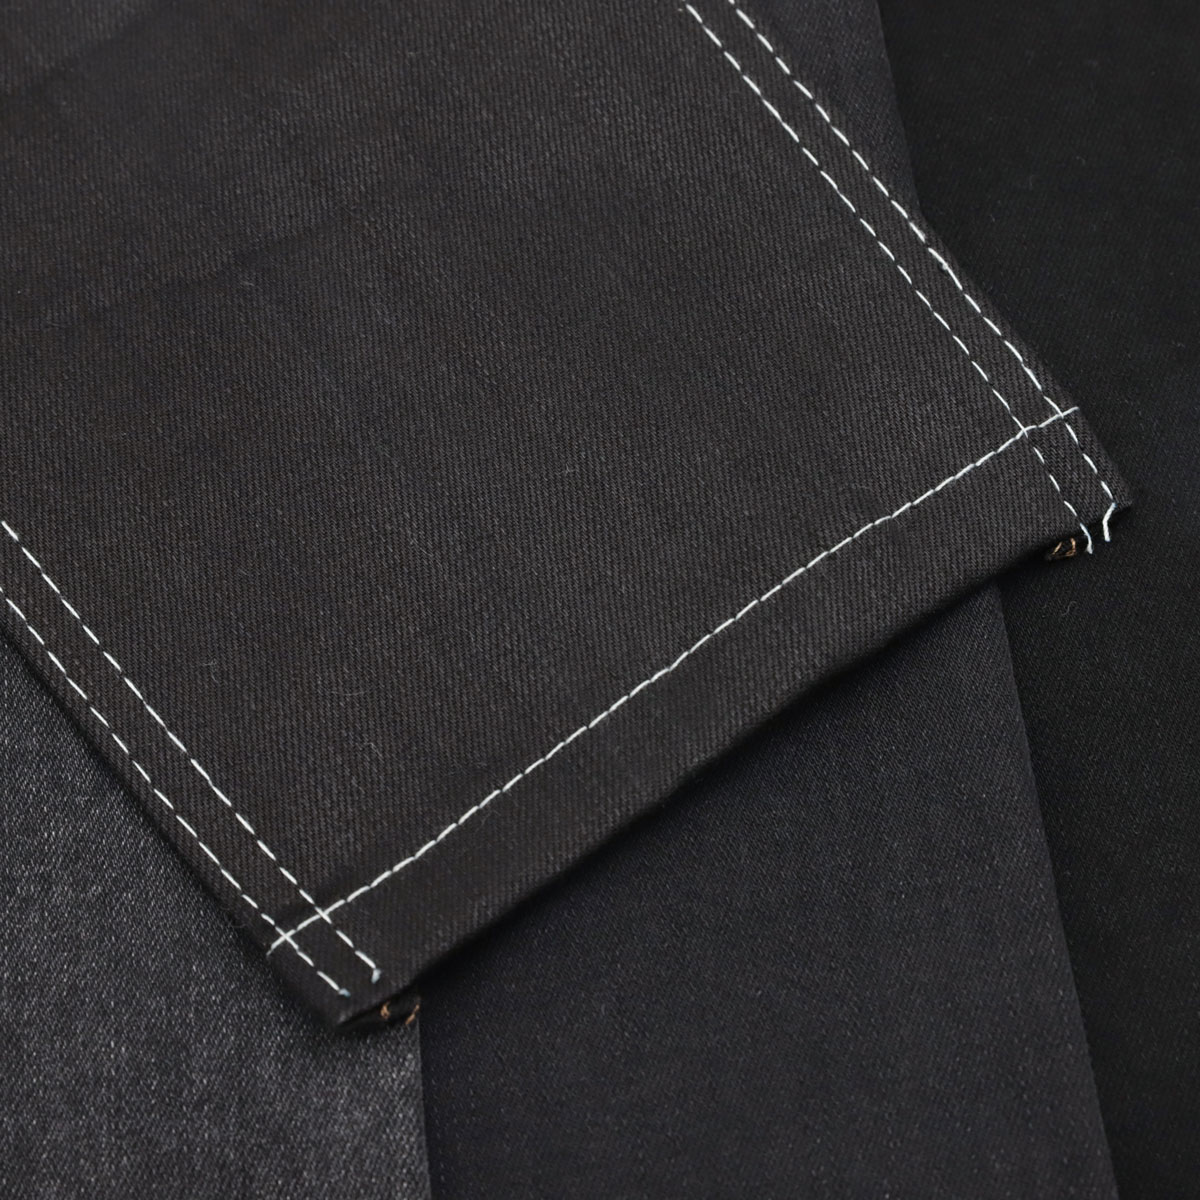 What Is a High-quality Stretch Denim Fabric? 1